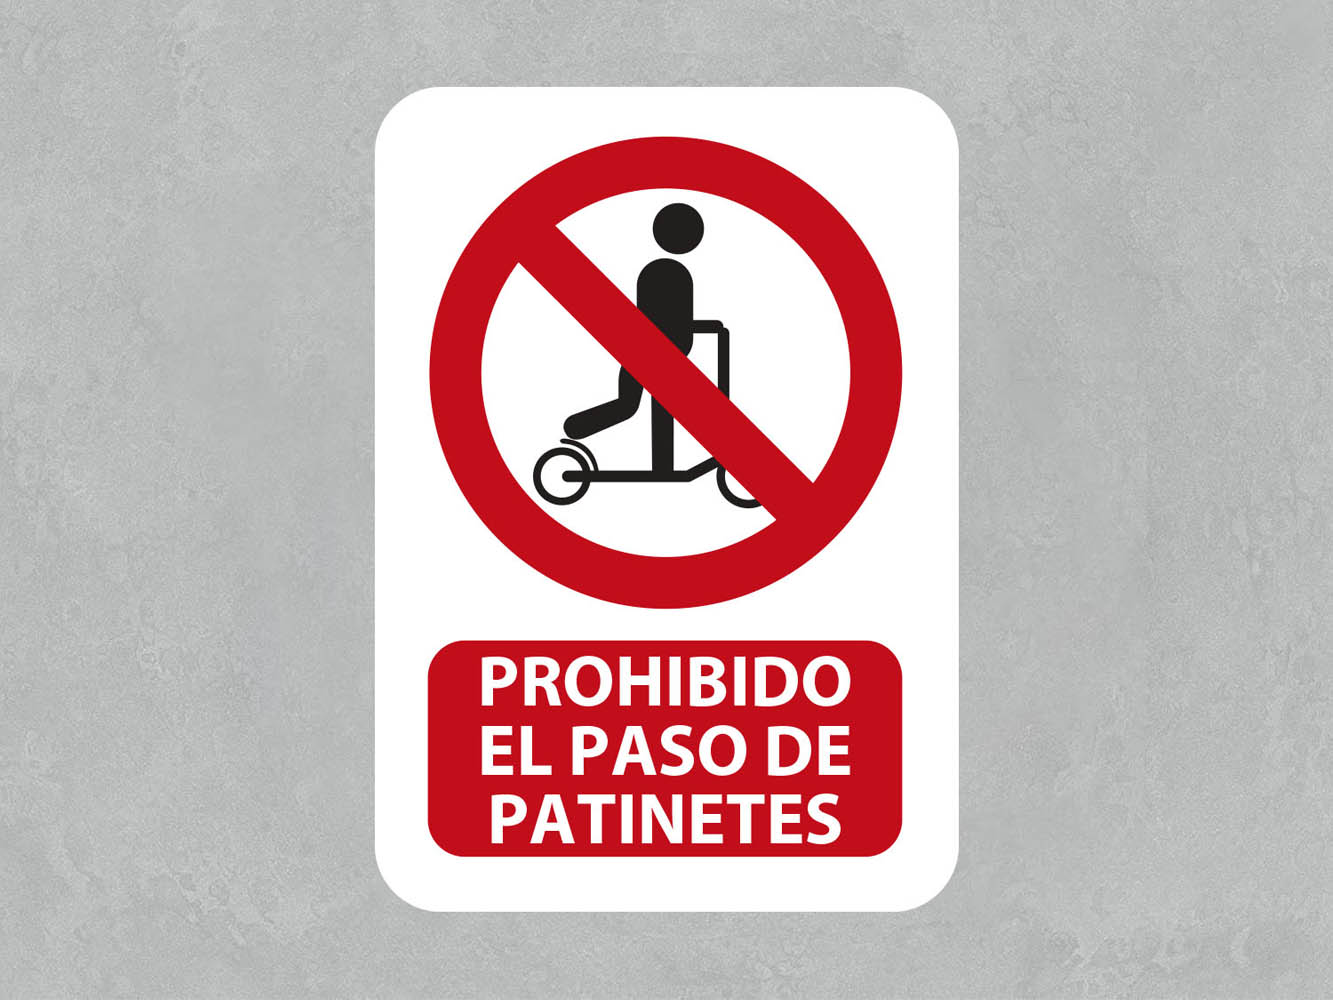 https://www.oedimdecor.com/wp-content/uploads/2021/11/Prohibido-el-paso-de-patinetes.jpg